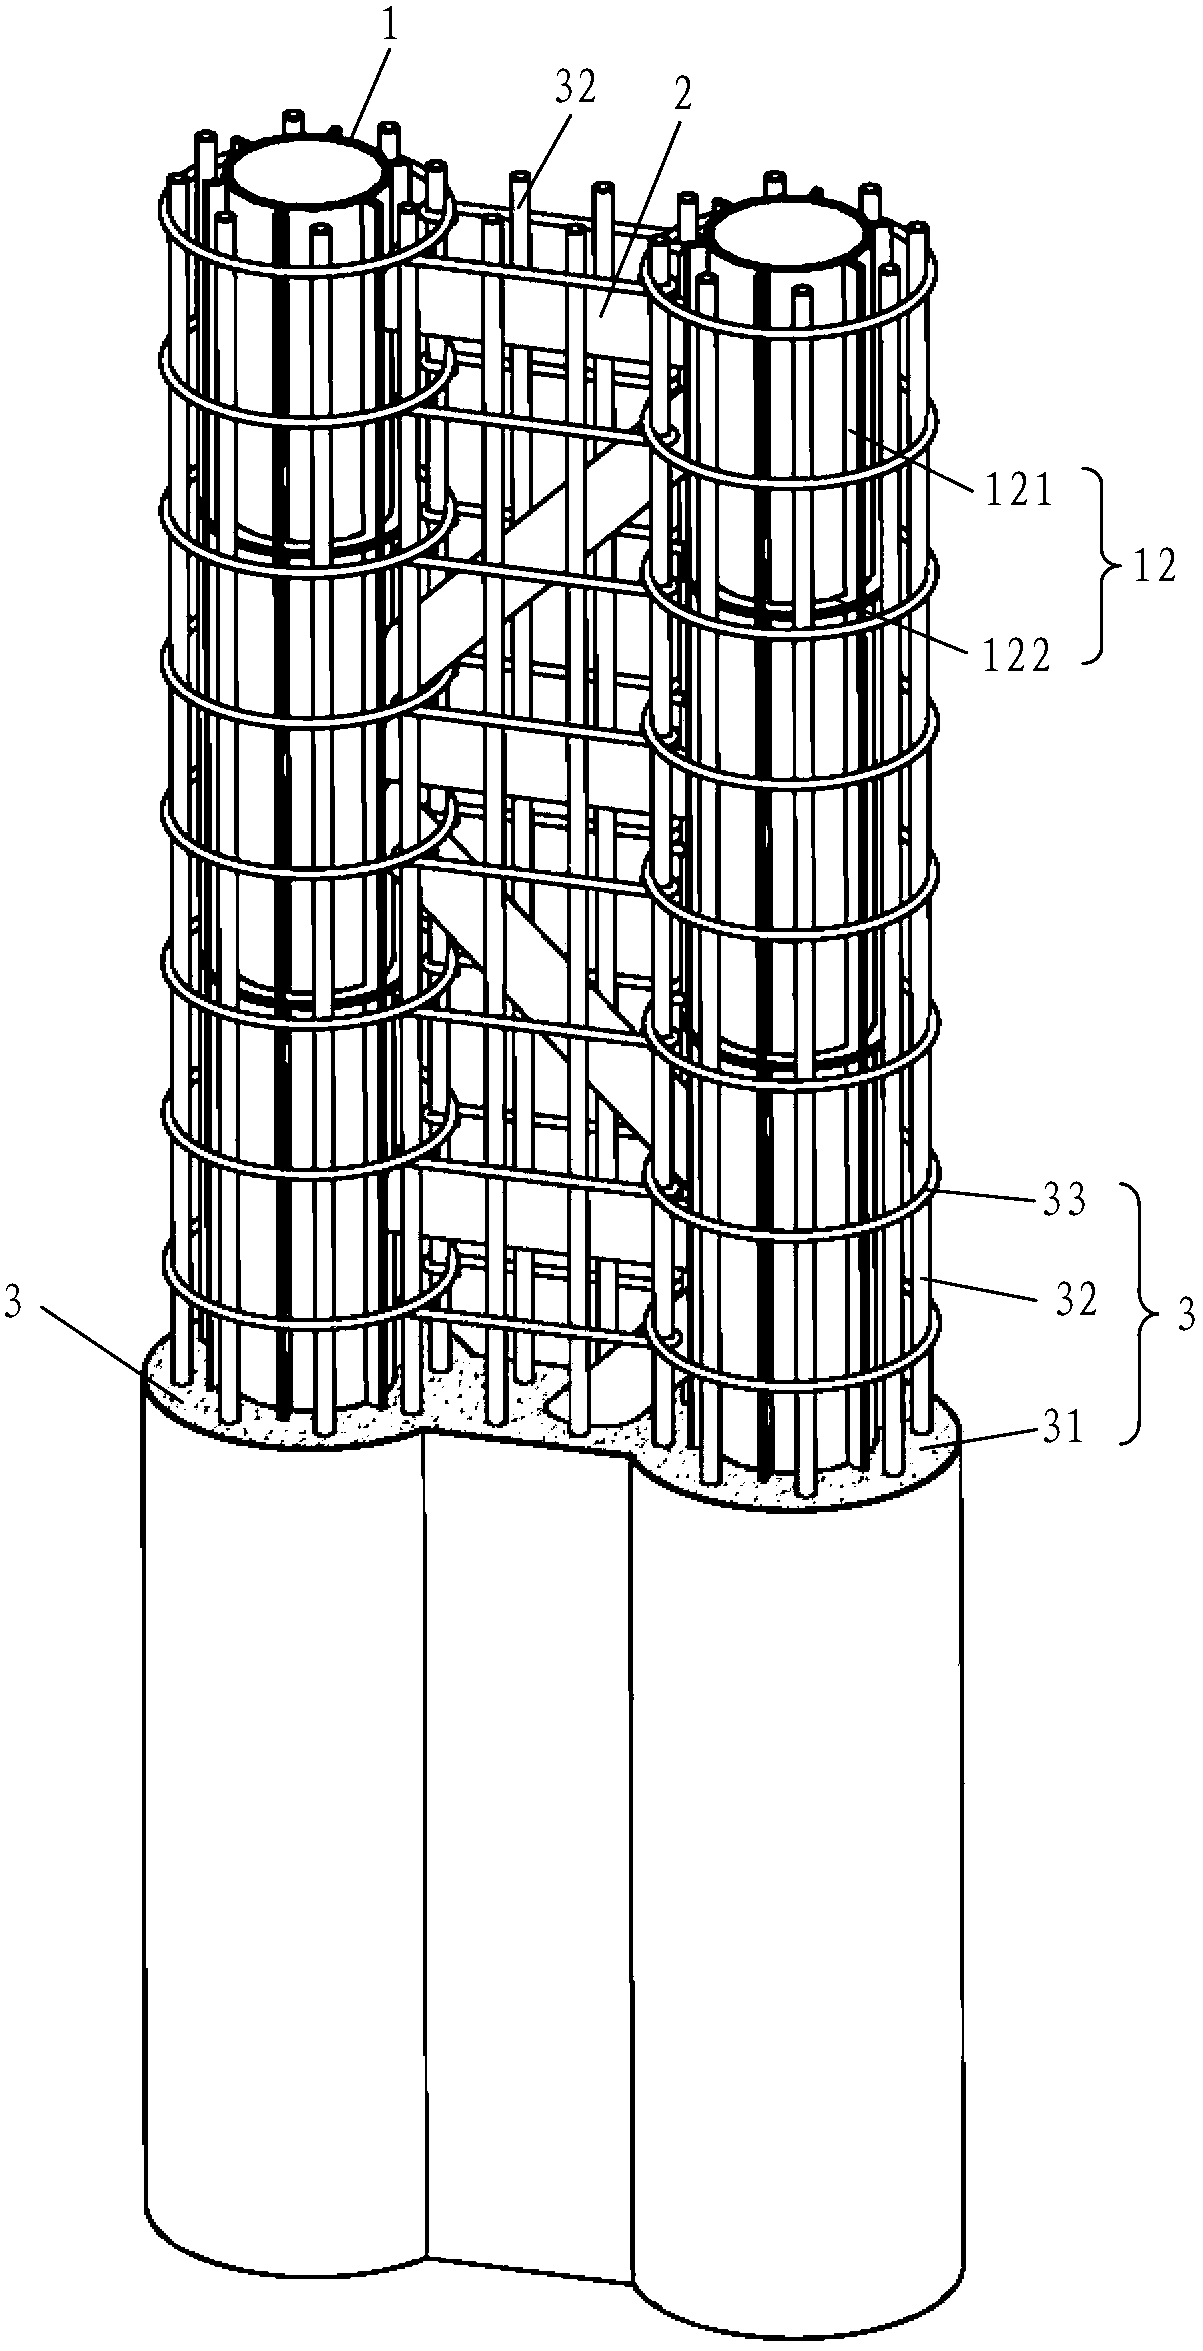 Reinforced concrete pipe lattice column